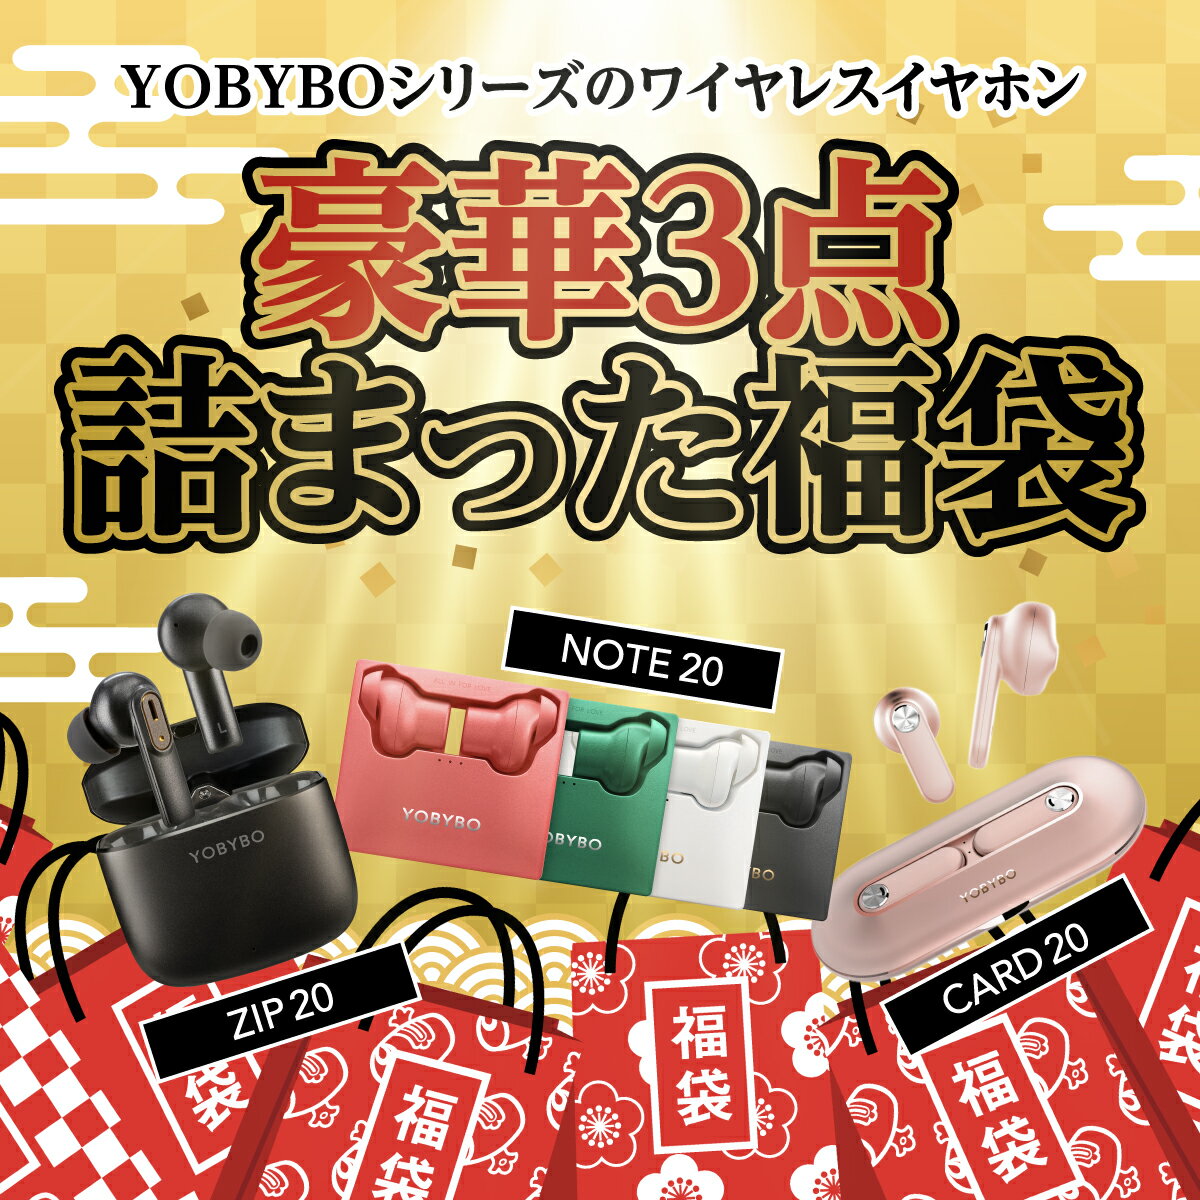 YOBYBO『ワイヤレスイヤホン3点福袋セット』